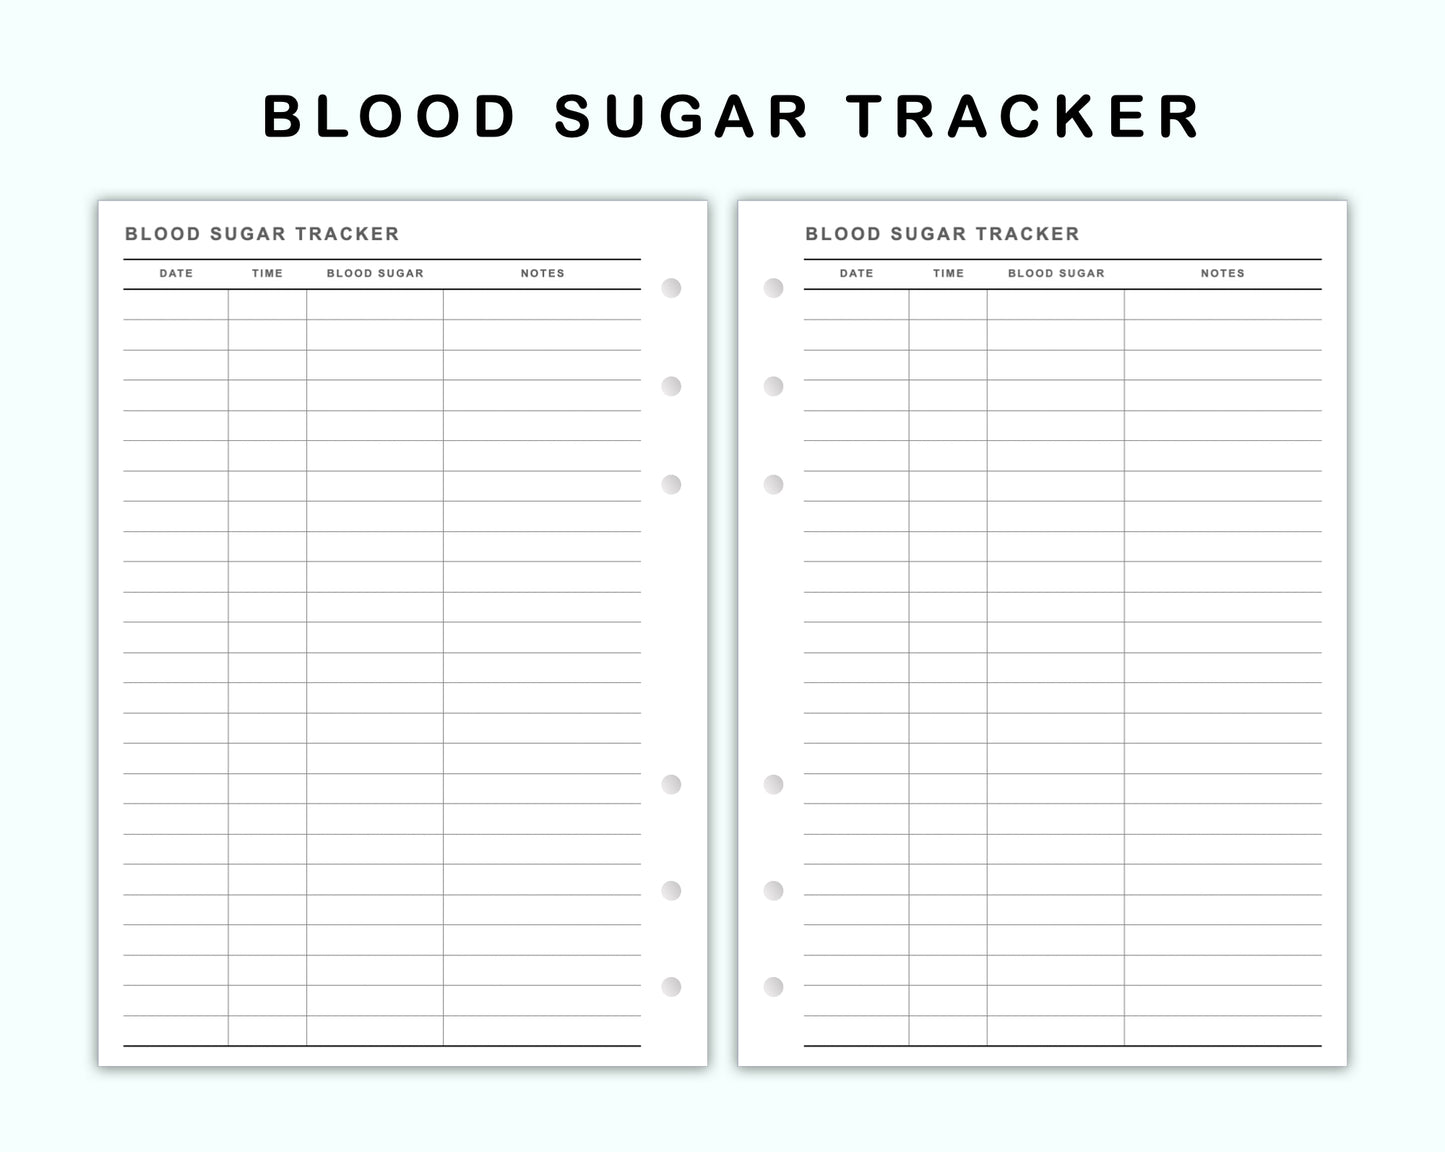 Personal Wide Inserts - Blood Sugar Tracker